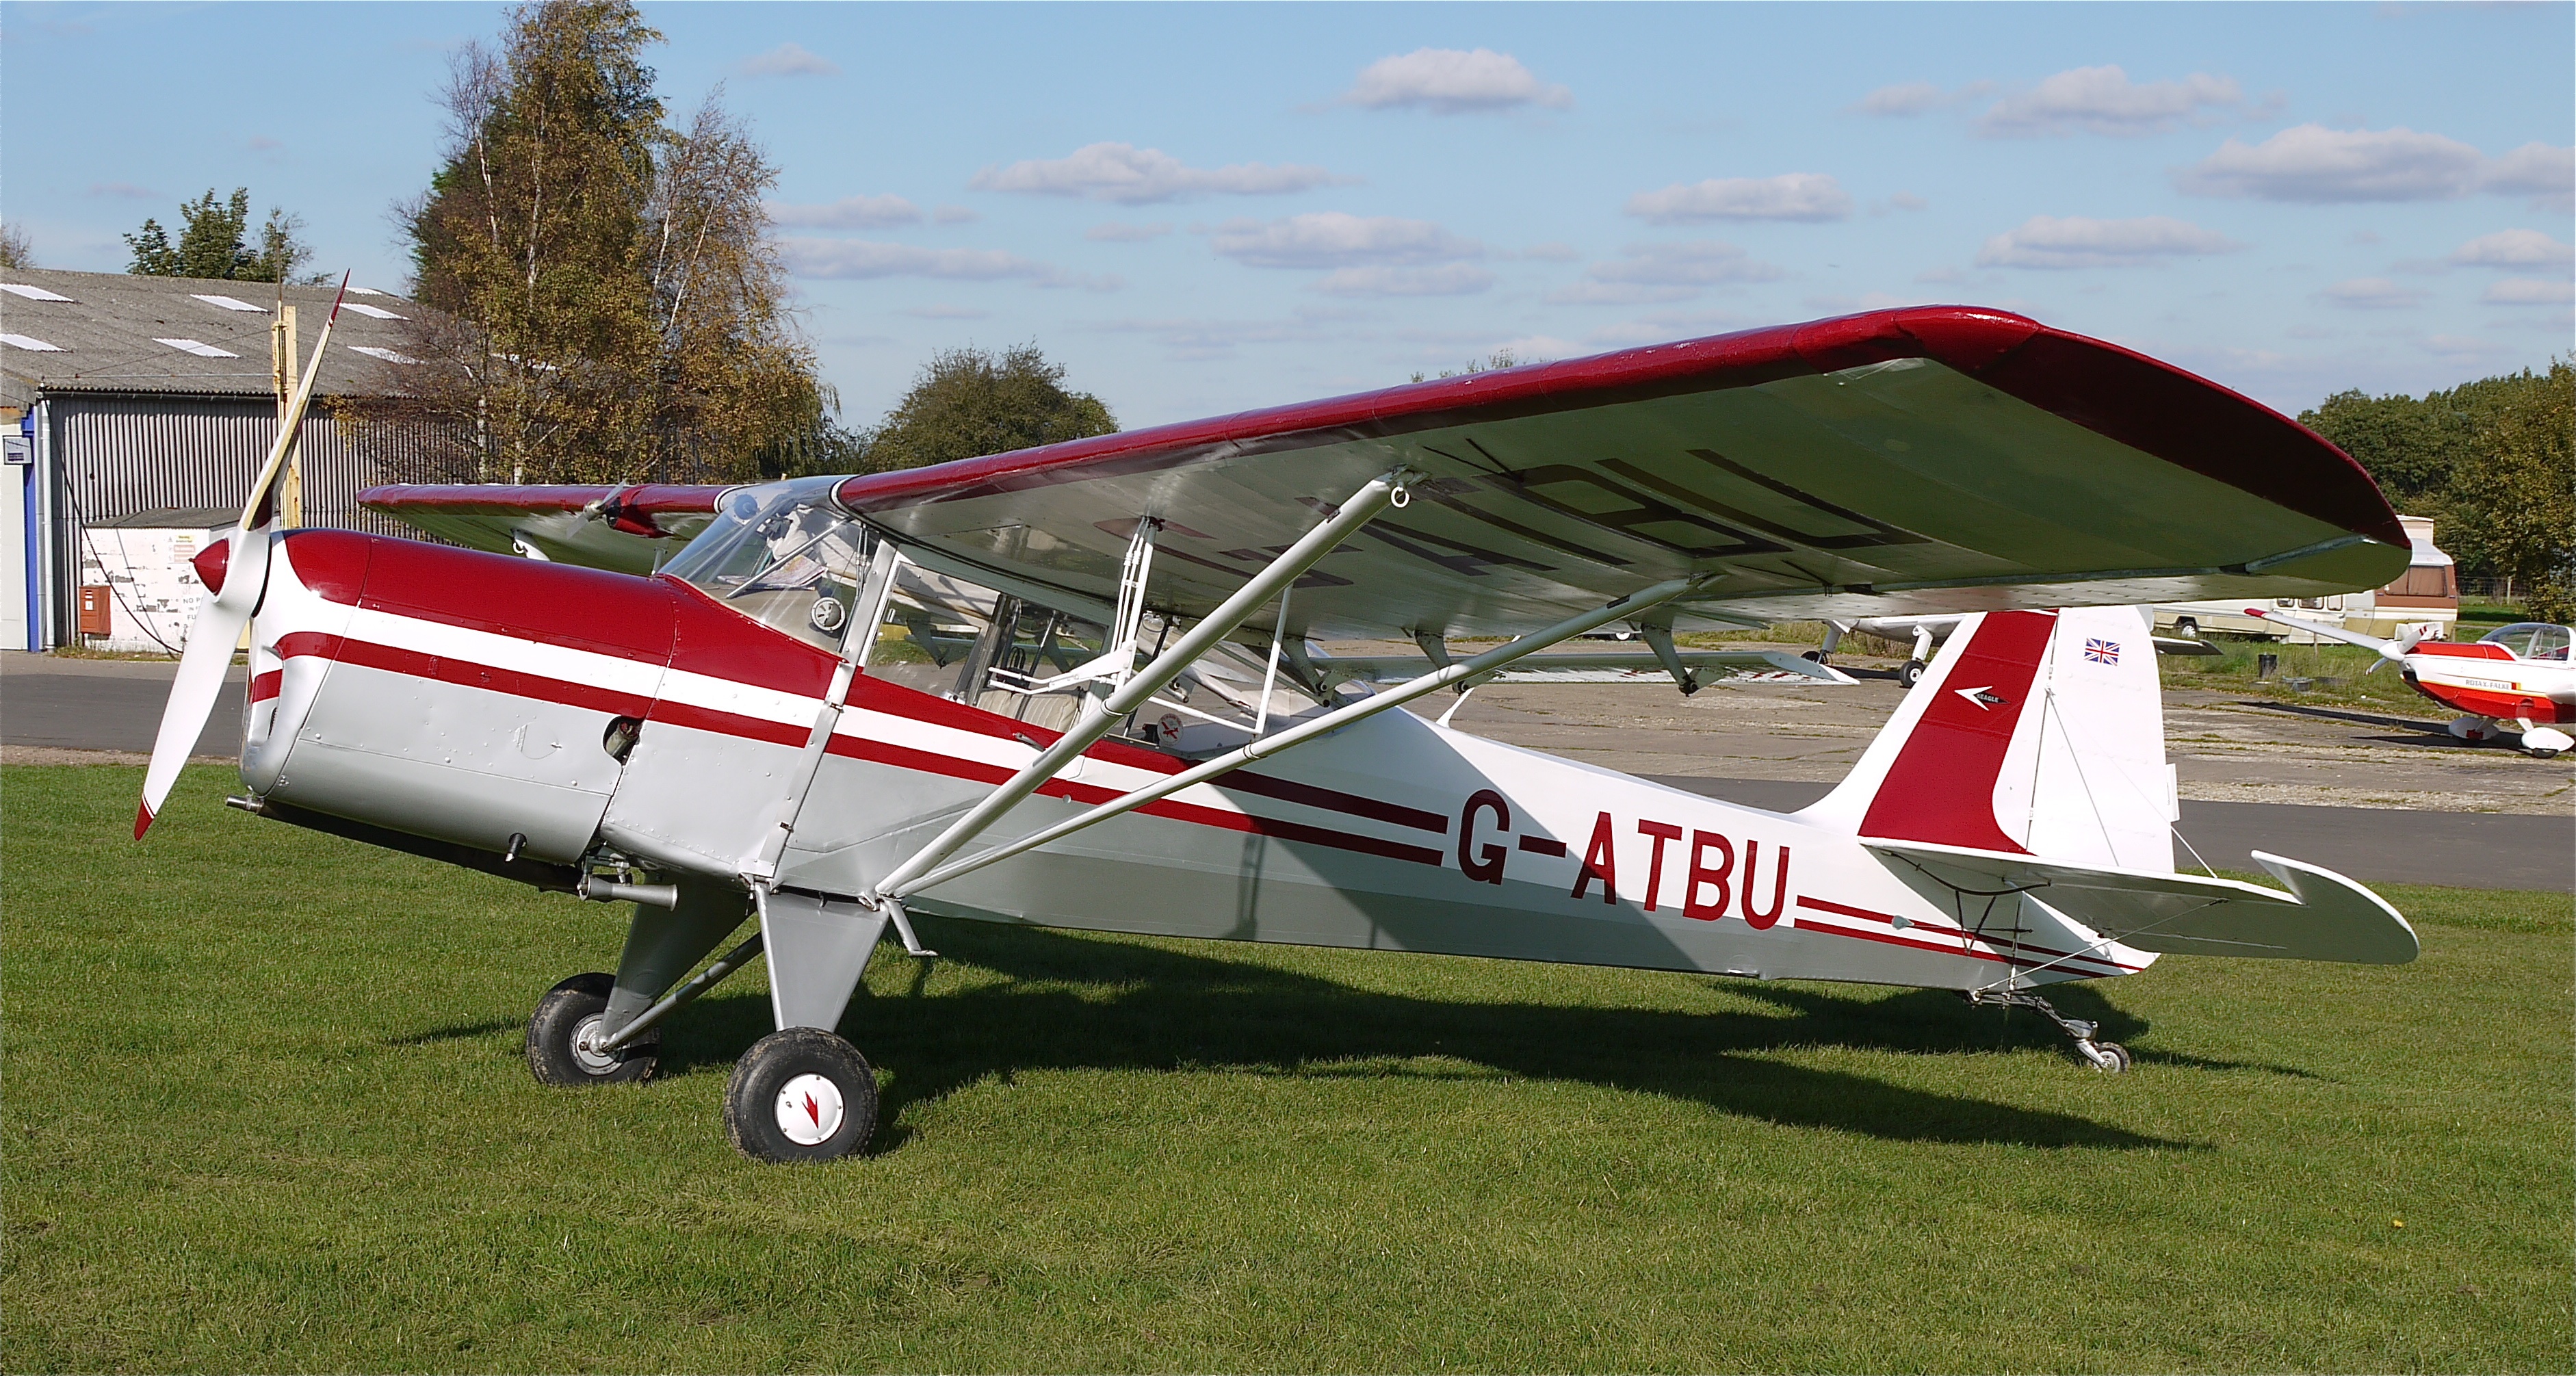 Light Aircraft at Sibbertoft, Husbands Bosworth Gliding Club - Flickr - mick - Lumix